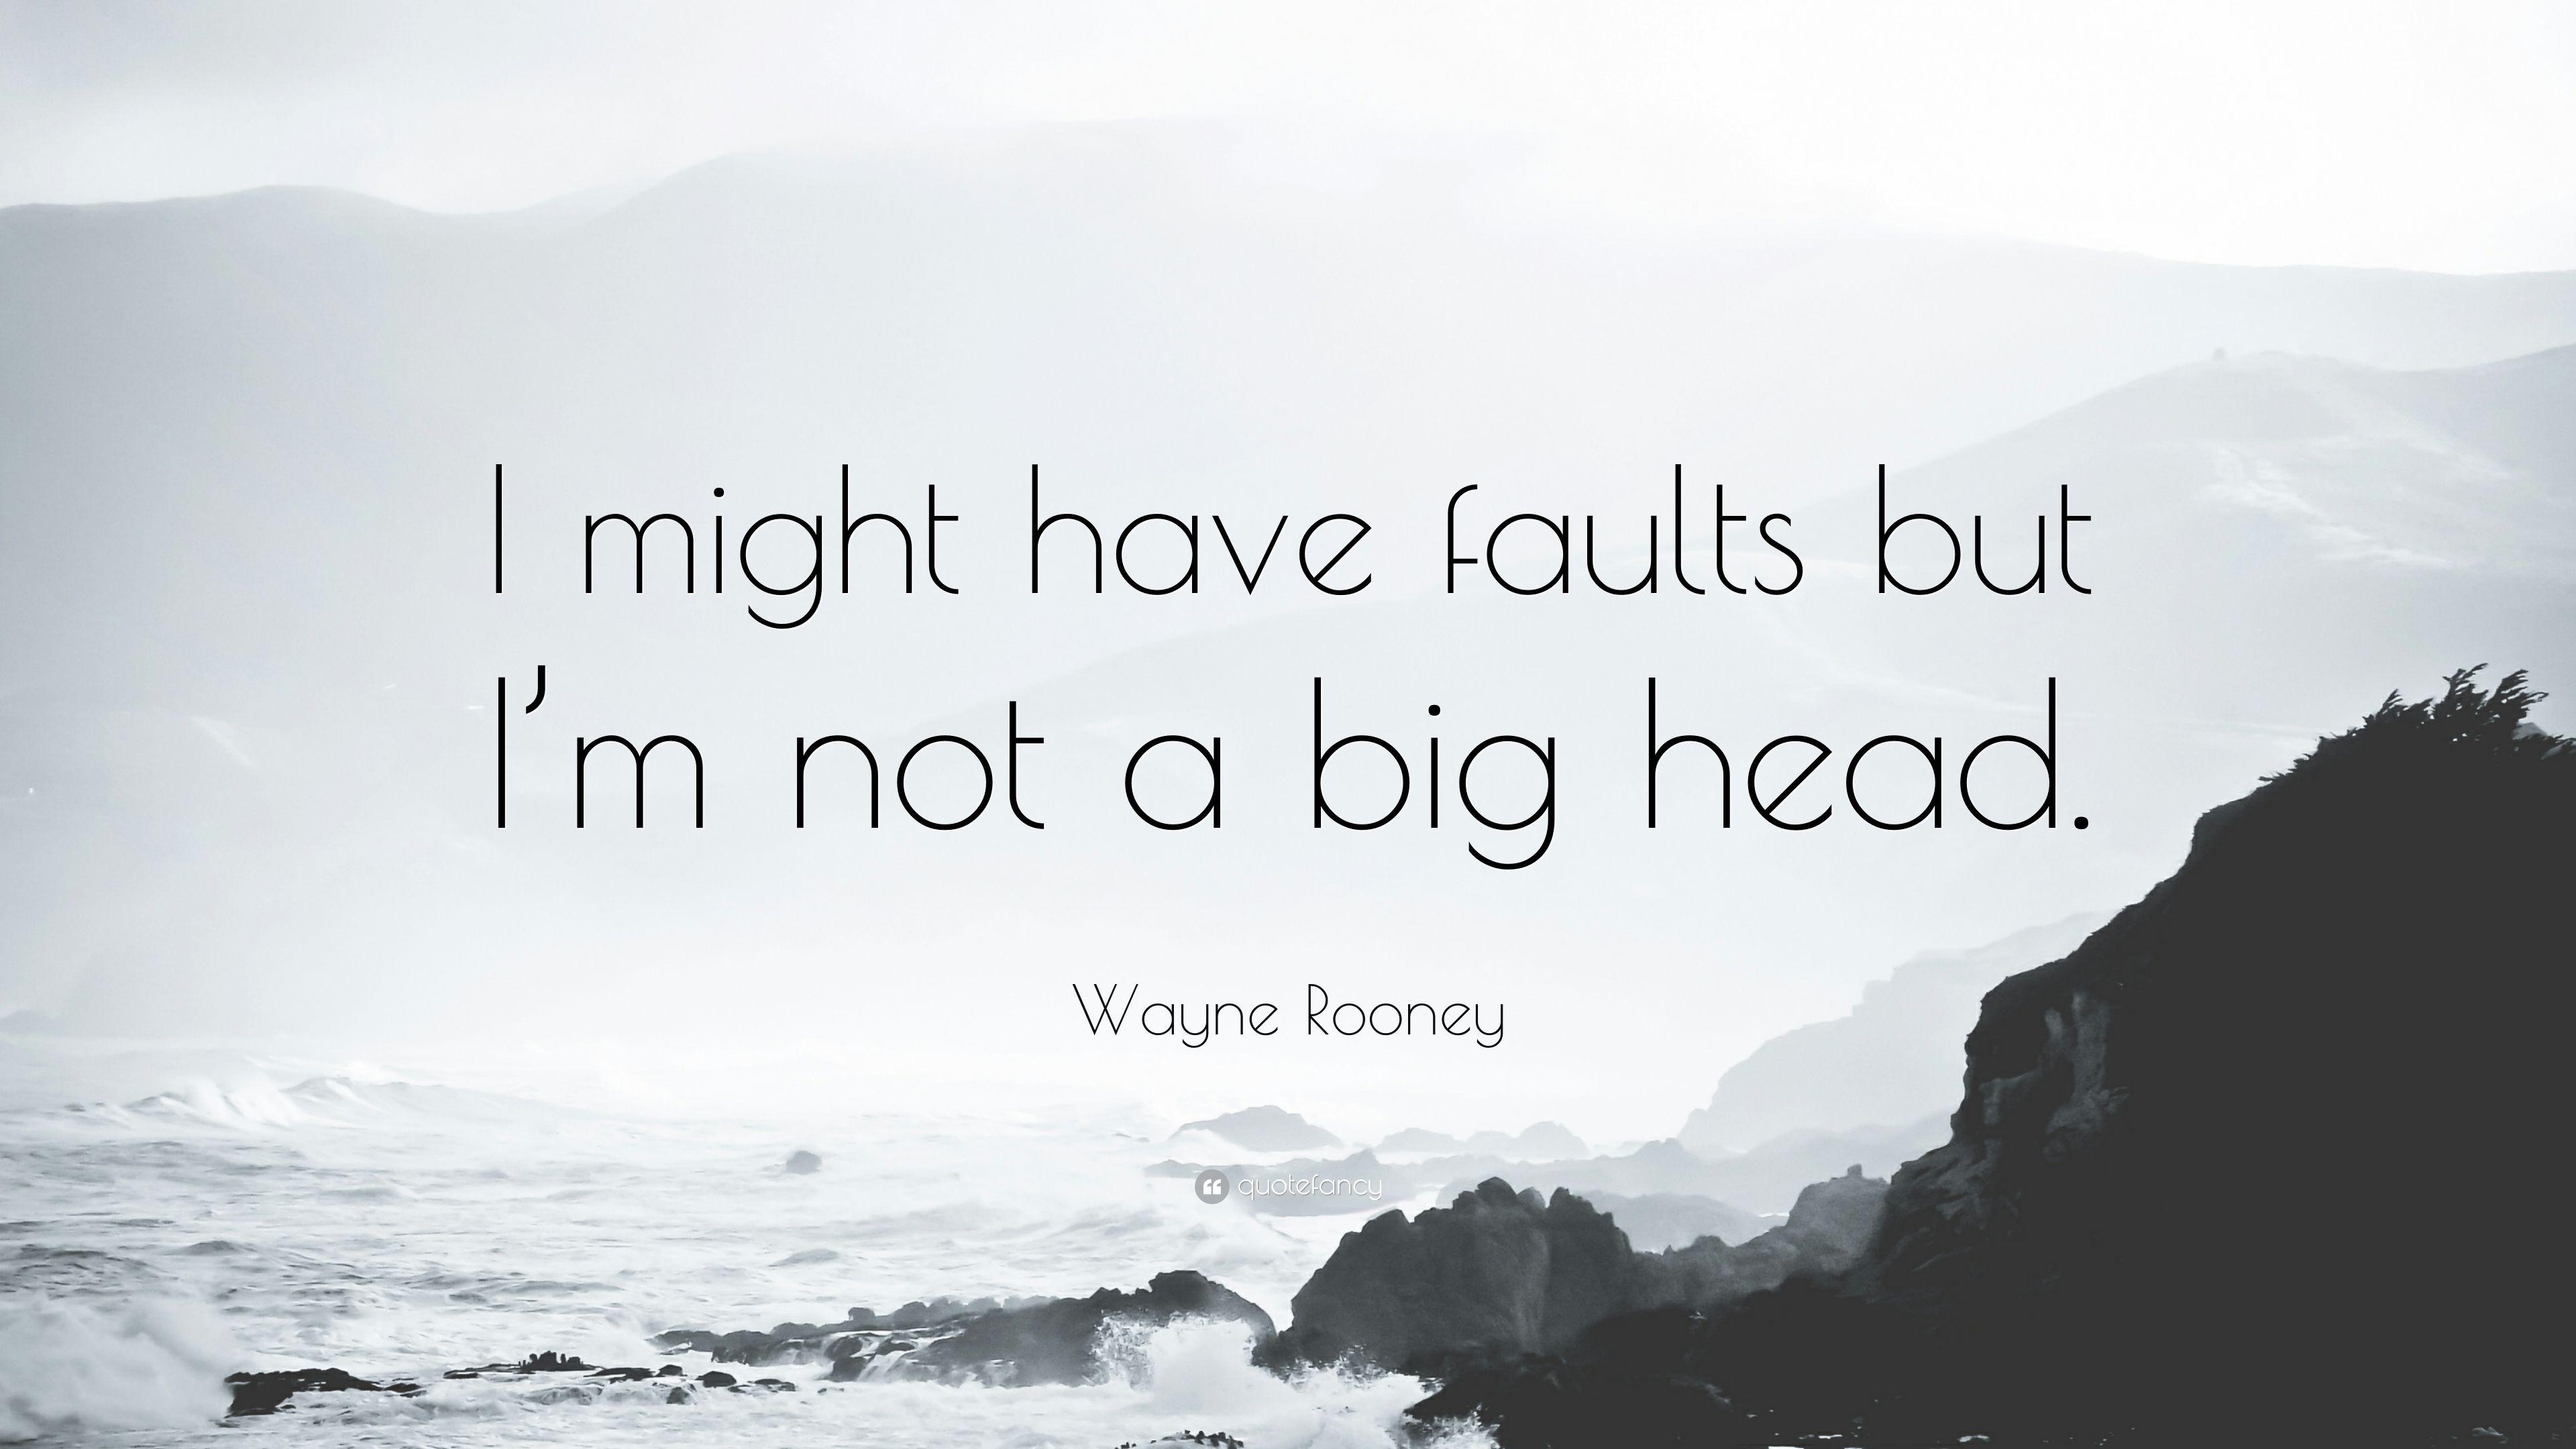 Wayne Rooney Quote: “I might have faults but I'm not a big head.” (7 wallpaper)